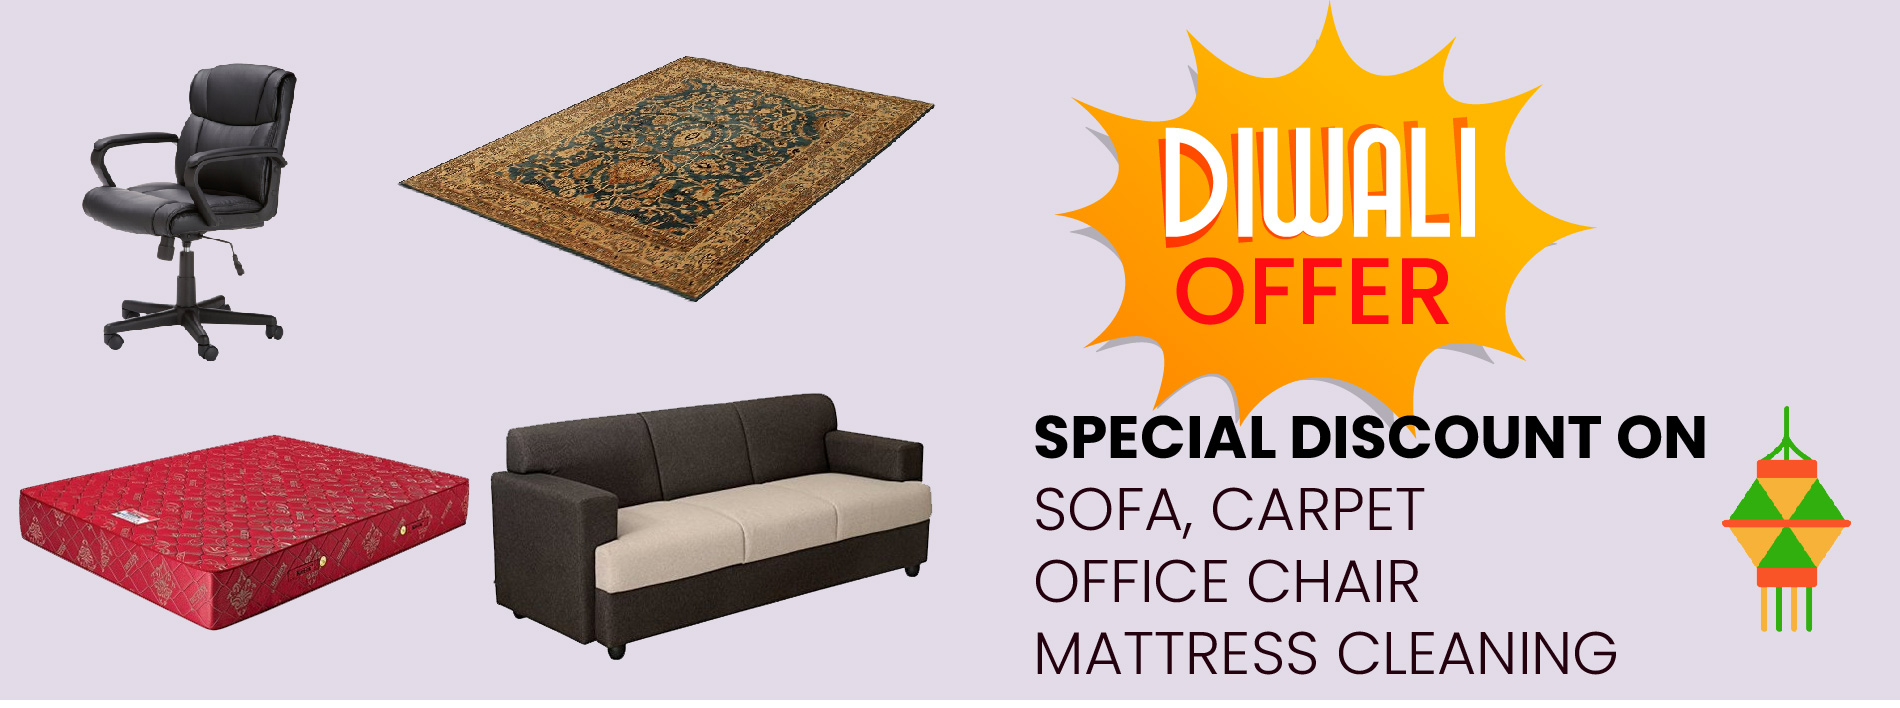 Sofa-Carpet-Office Chair-Mattress Cleaning